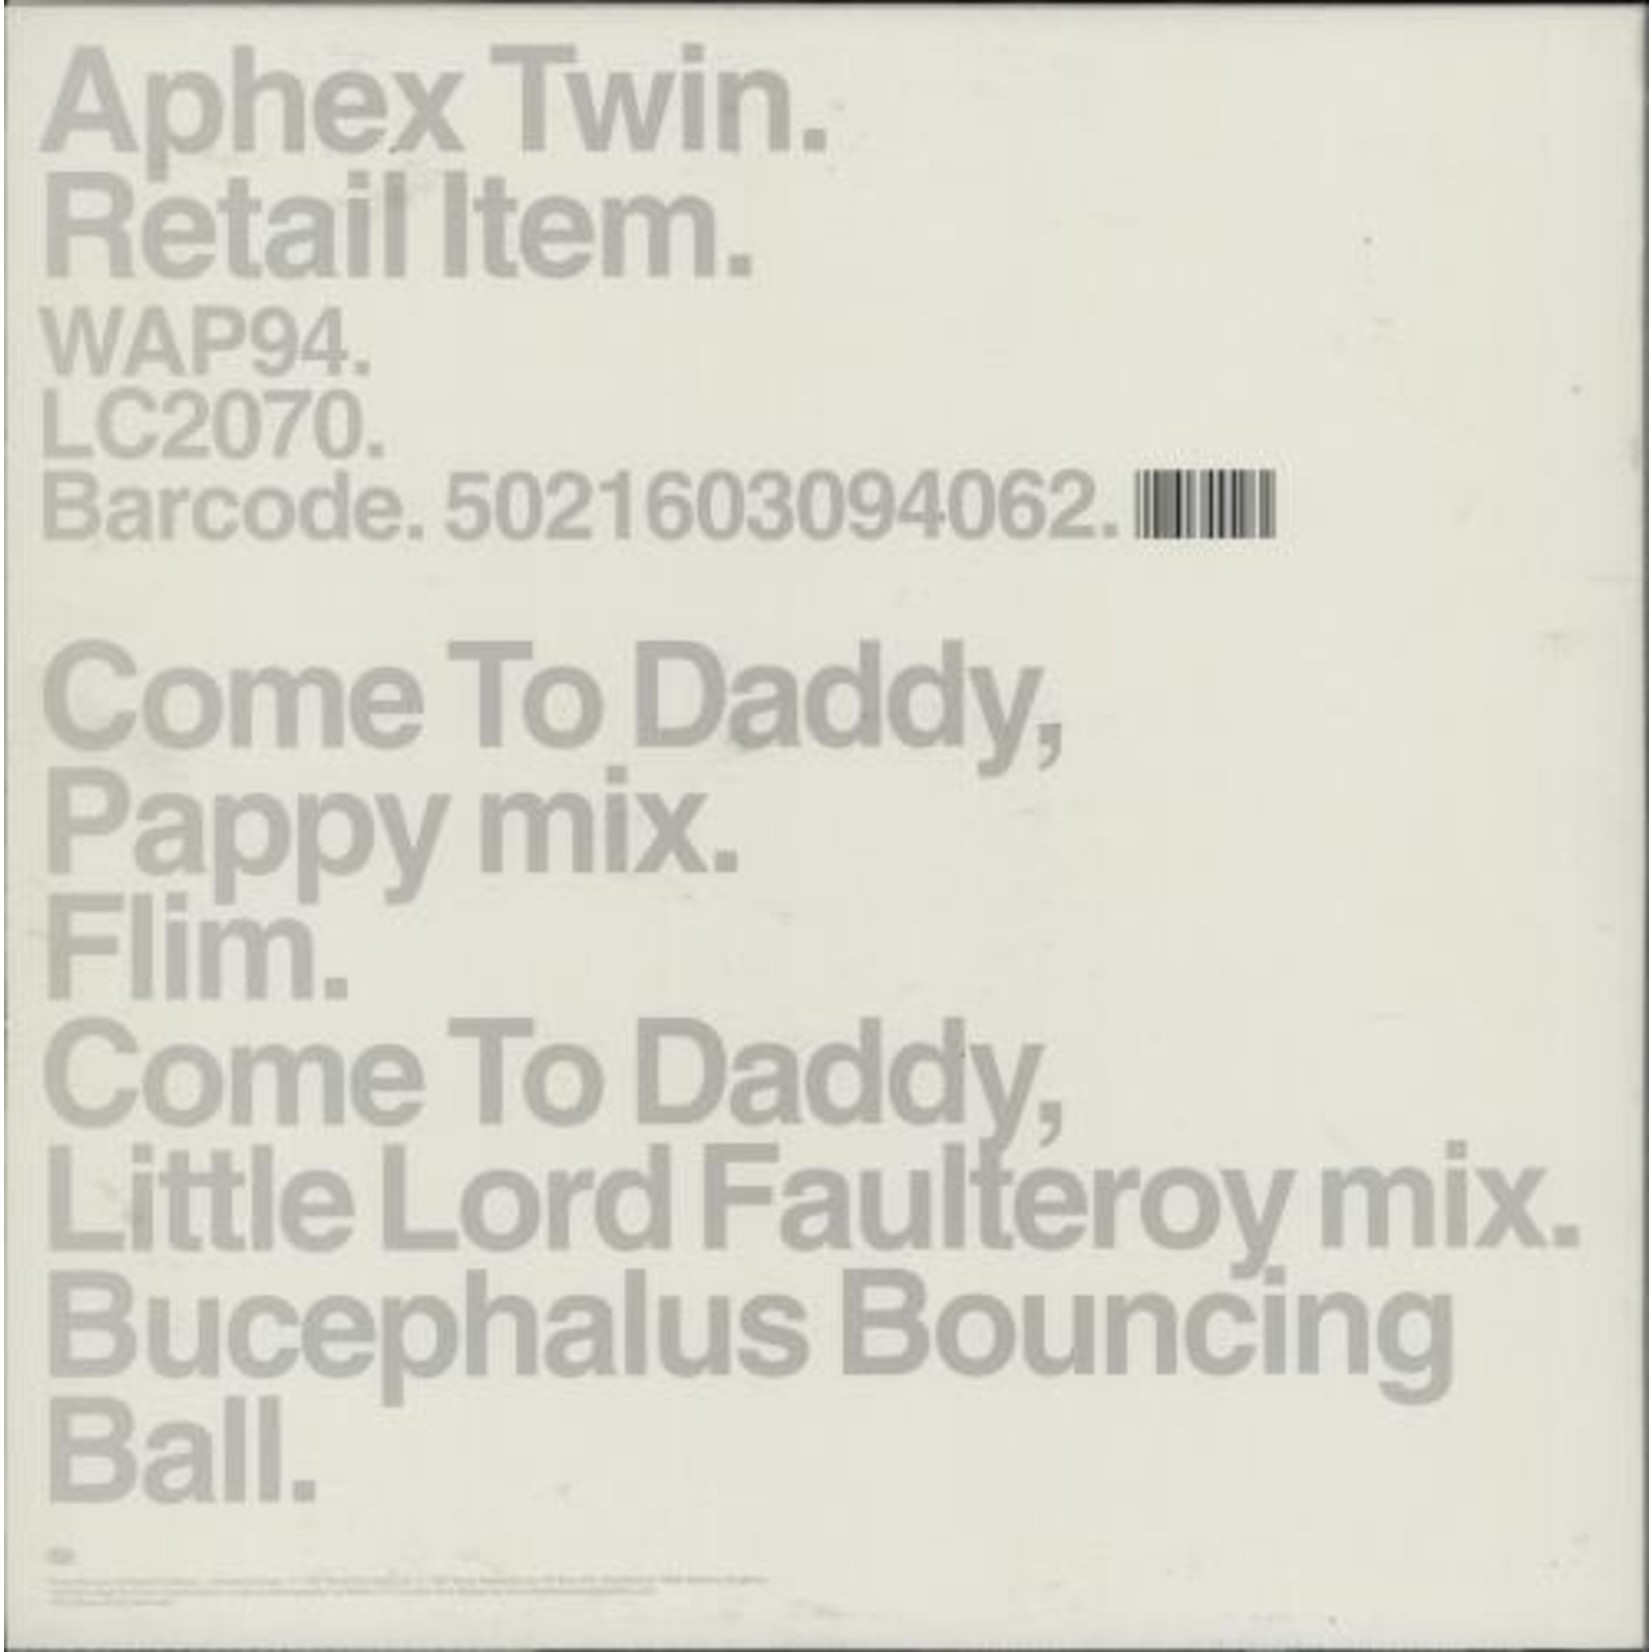 APHEX TWIN retail item LP